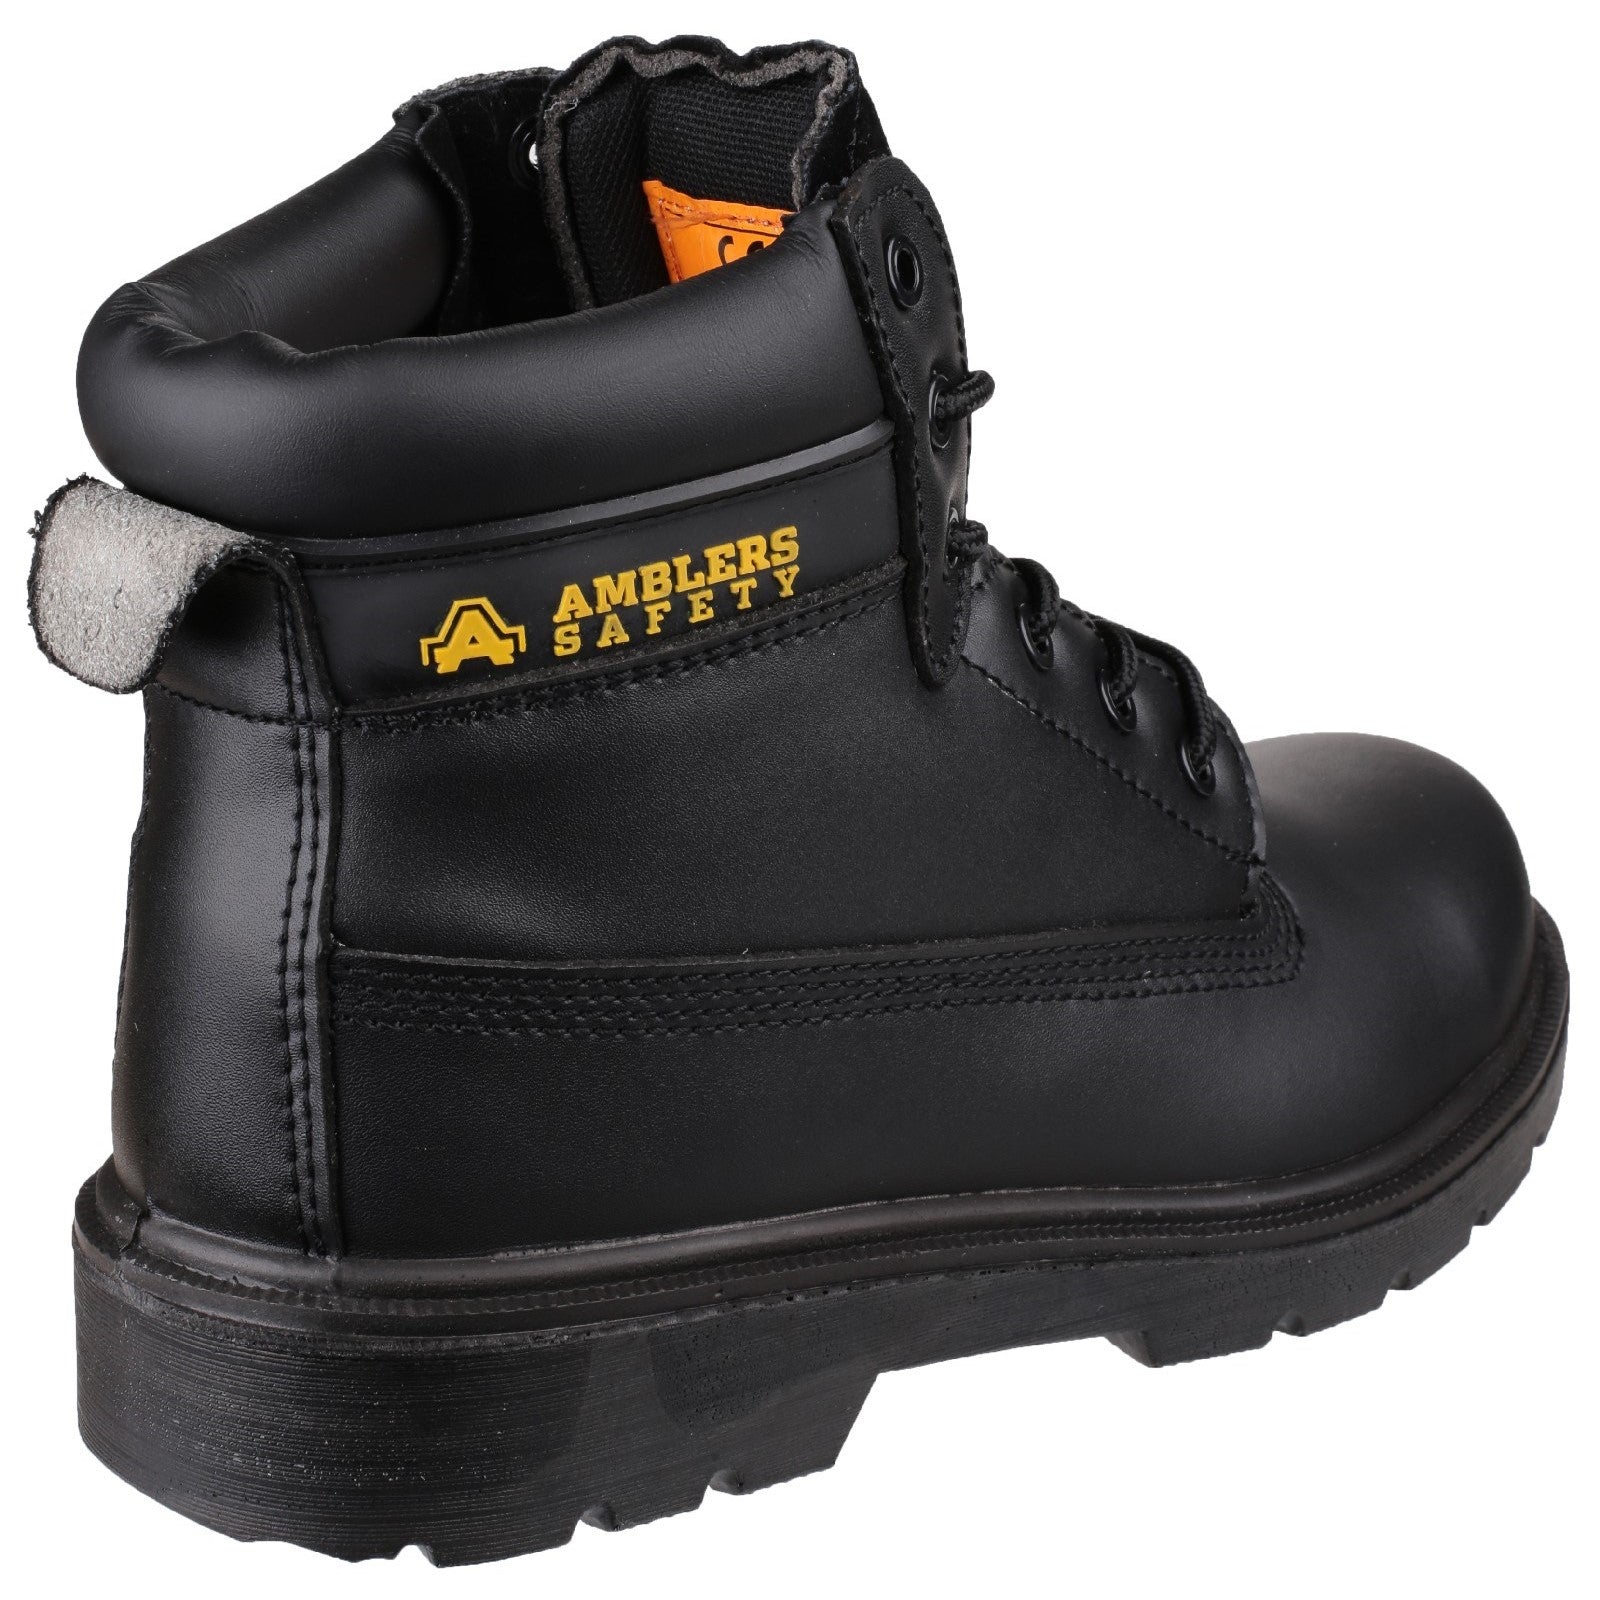 Amblers FS12C Metal Free Safety Boot